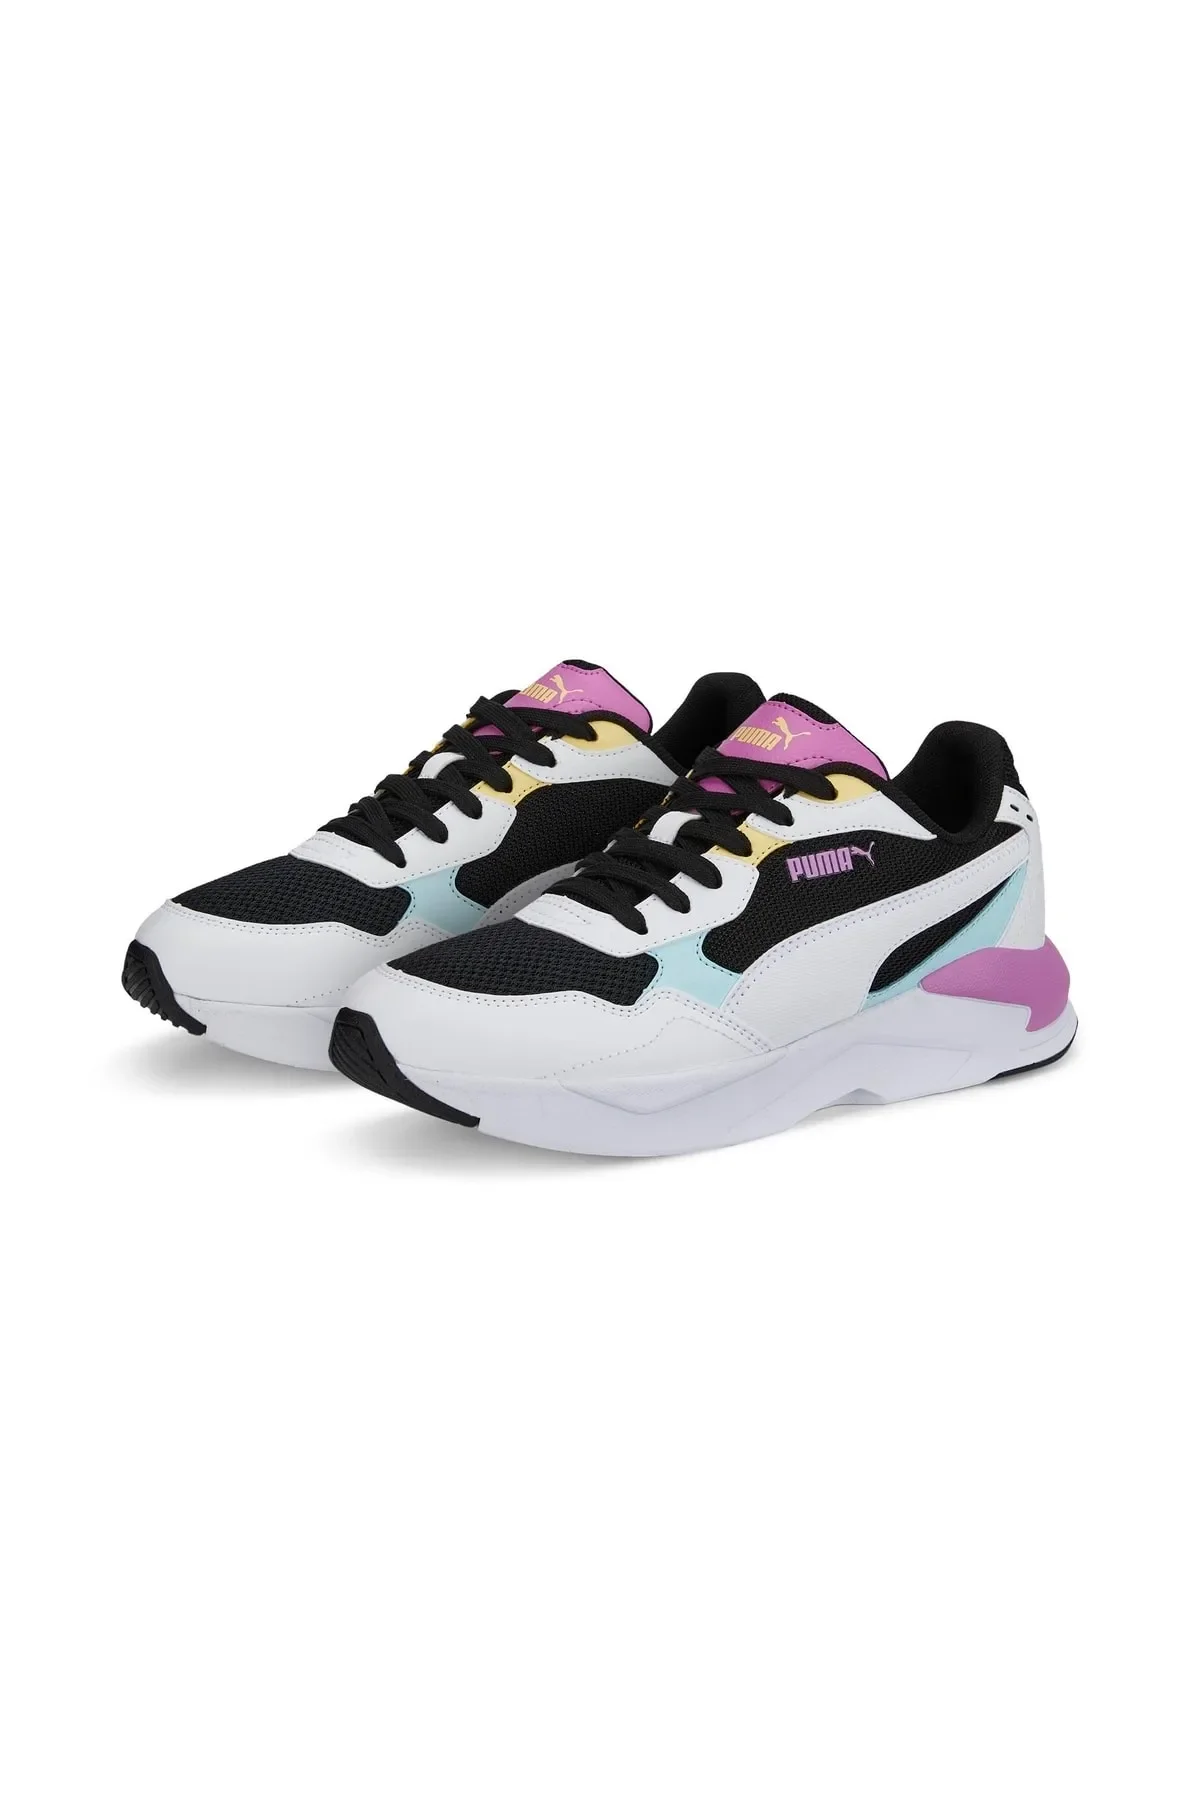 X-Ray Speed Lite - Kadın Sneaker Ayakkabı 384639 -Siyah - 3